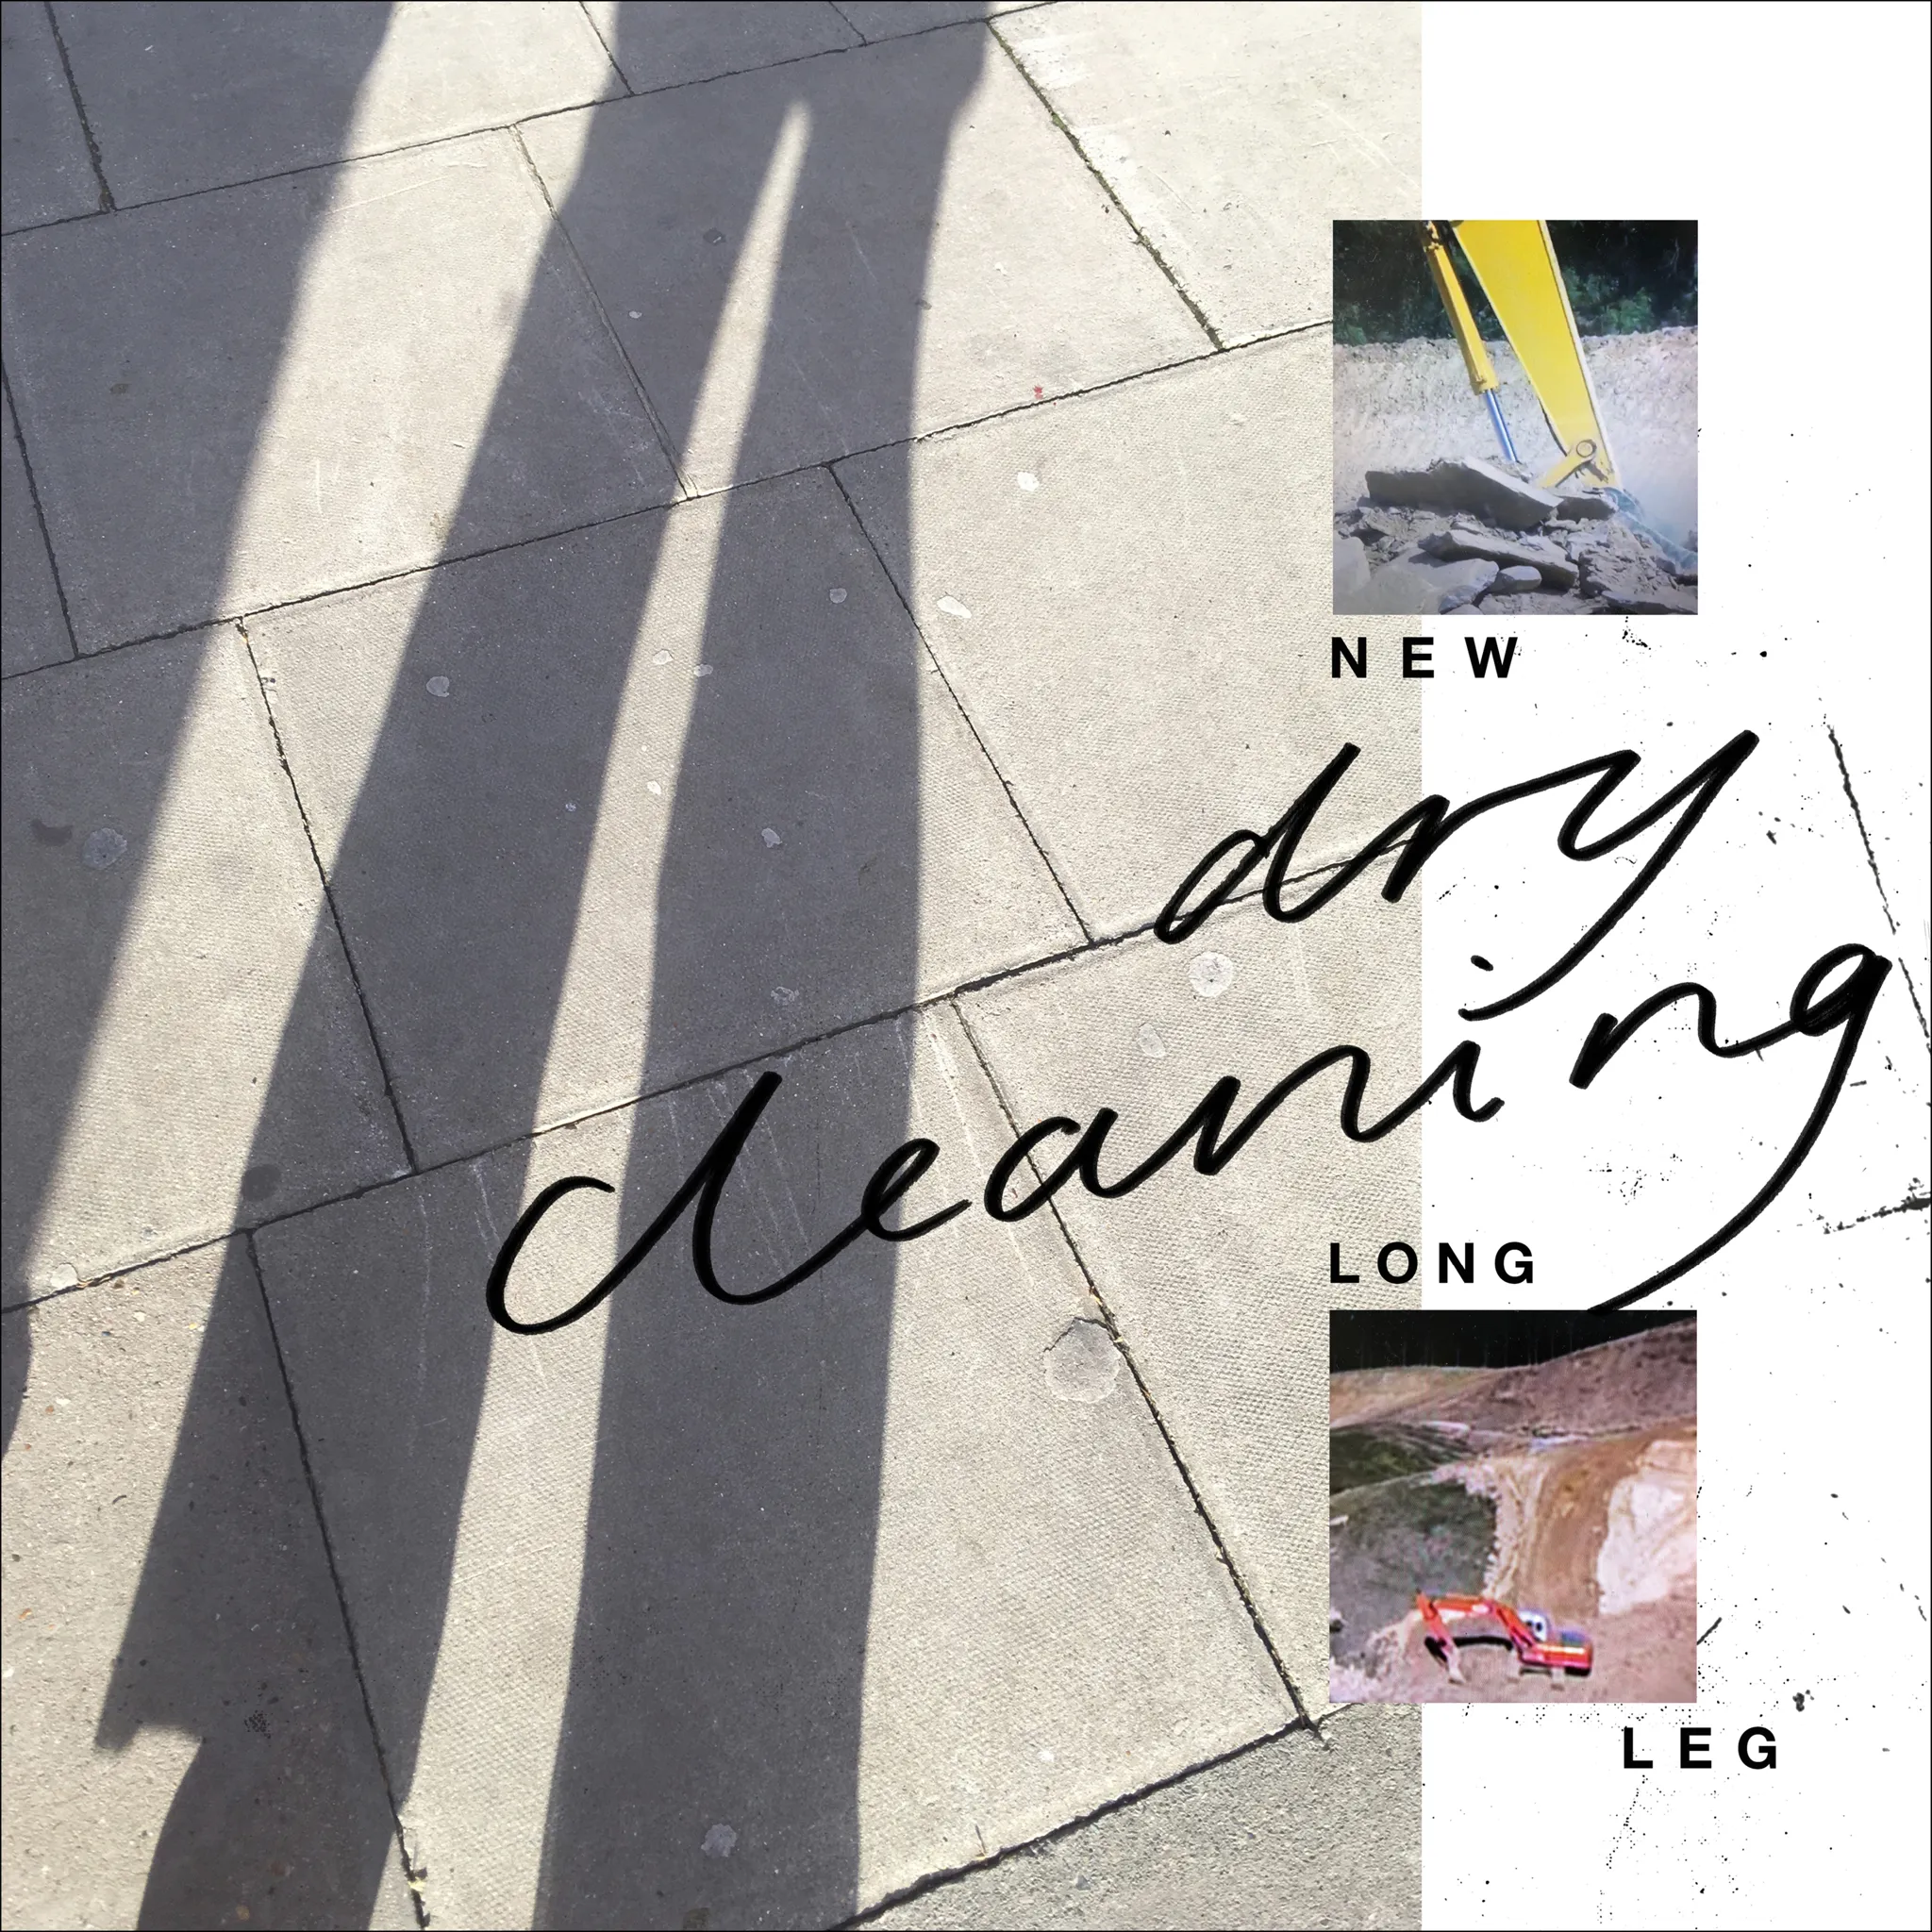 Dry Cleaning - New Long Leg artwork